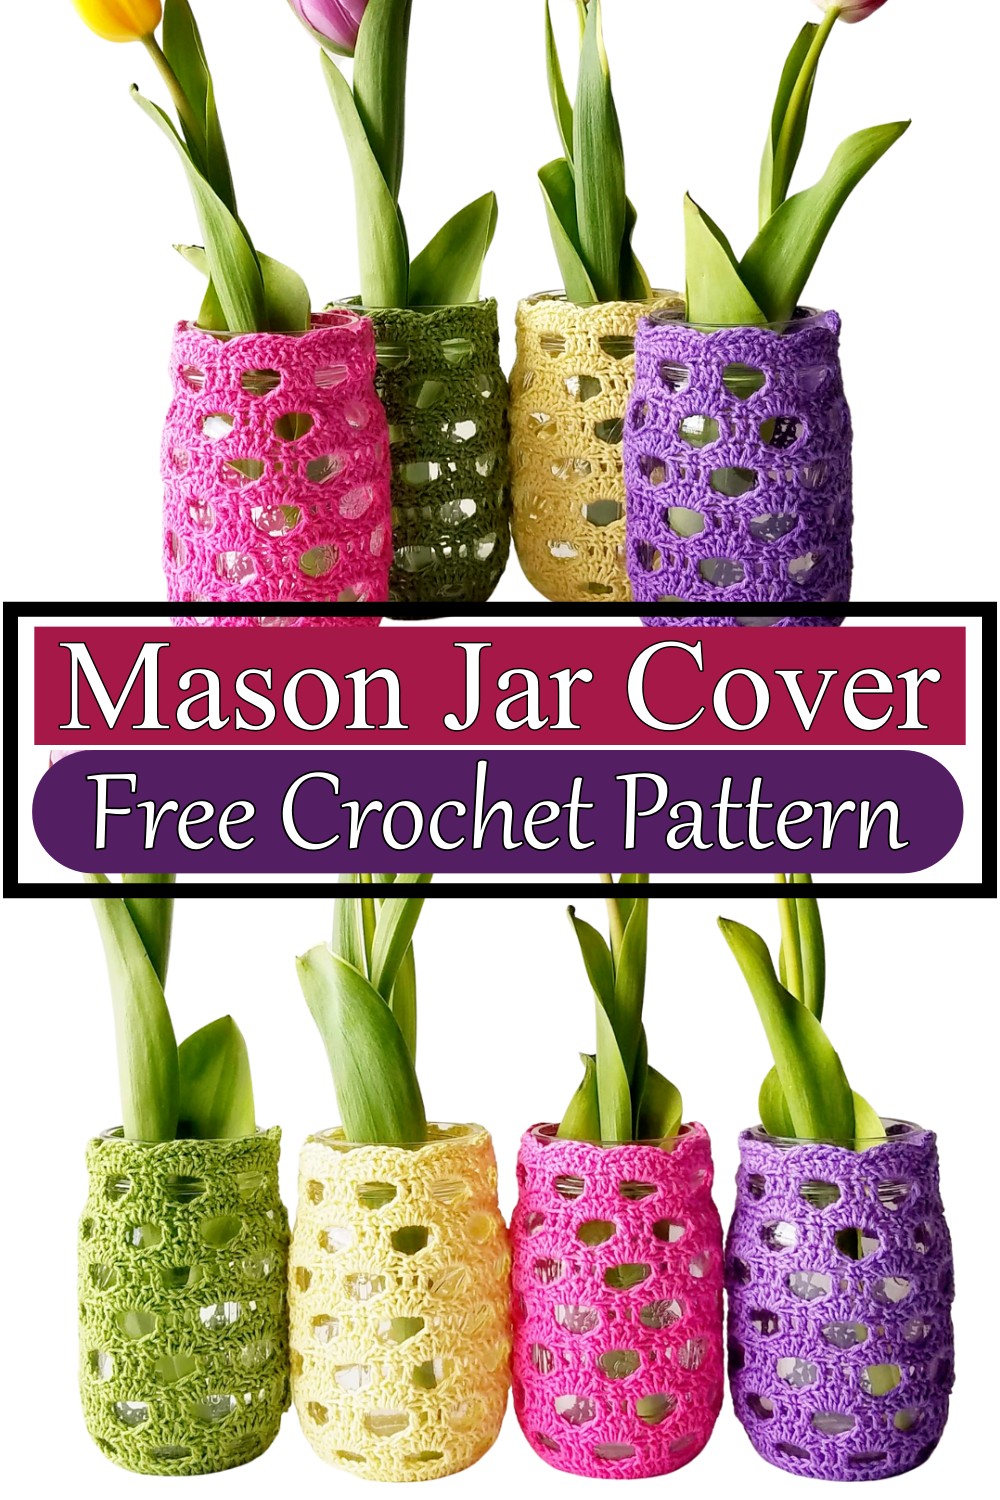 Mason Jar Cover